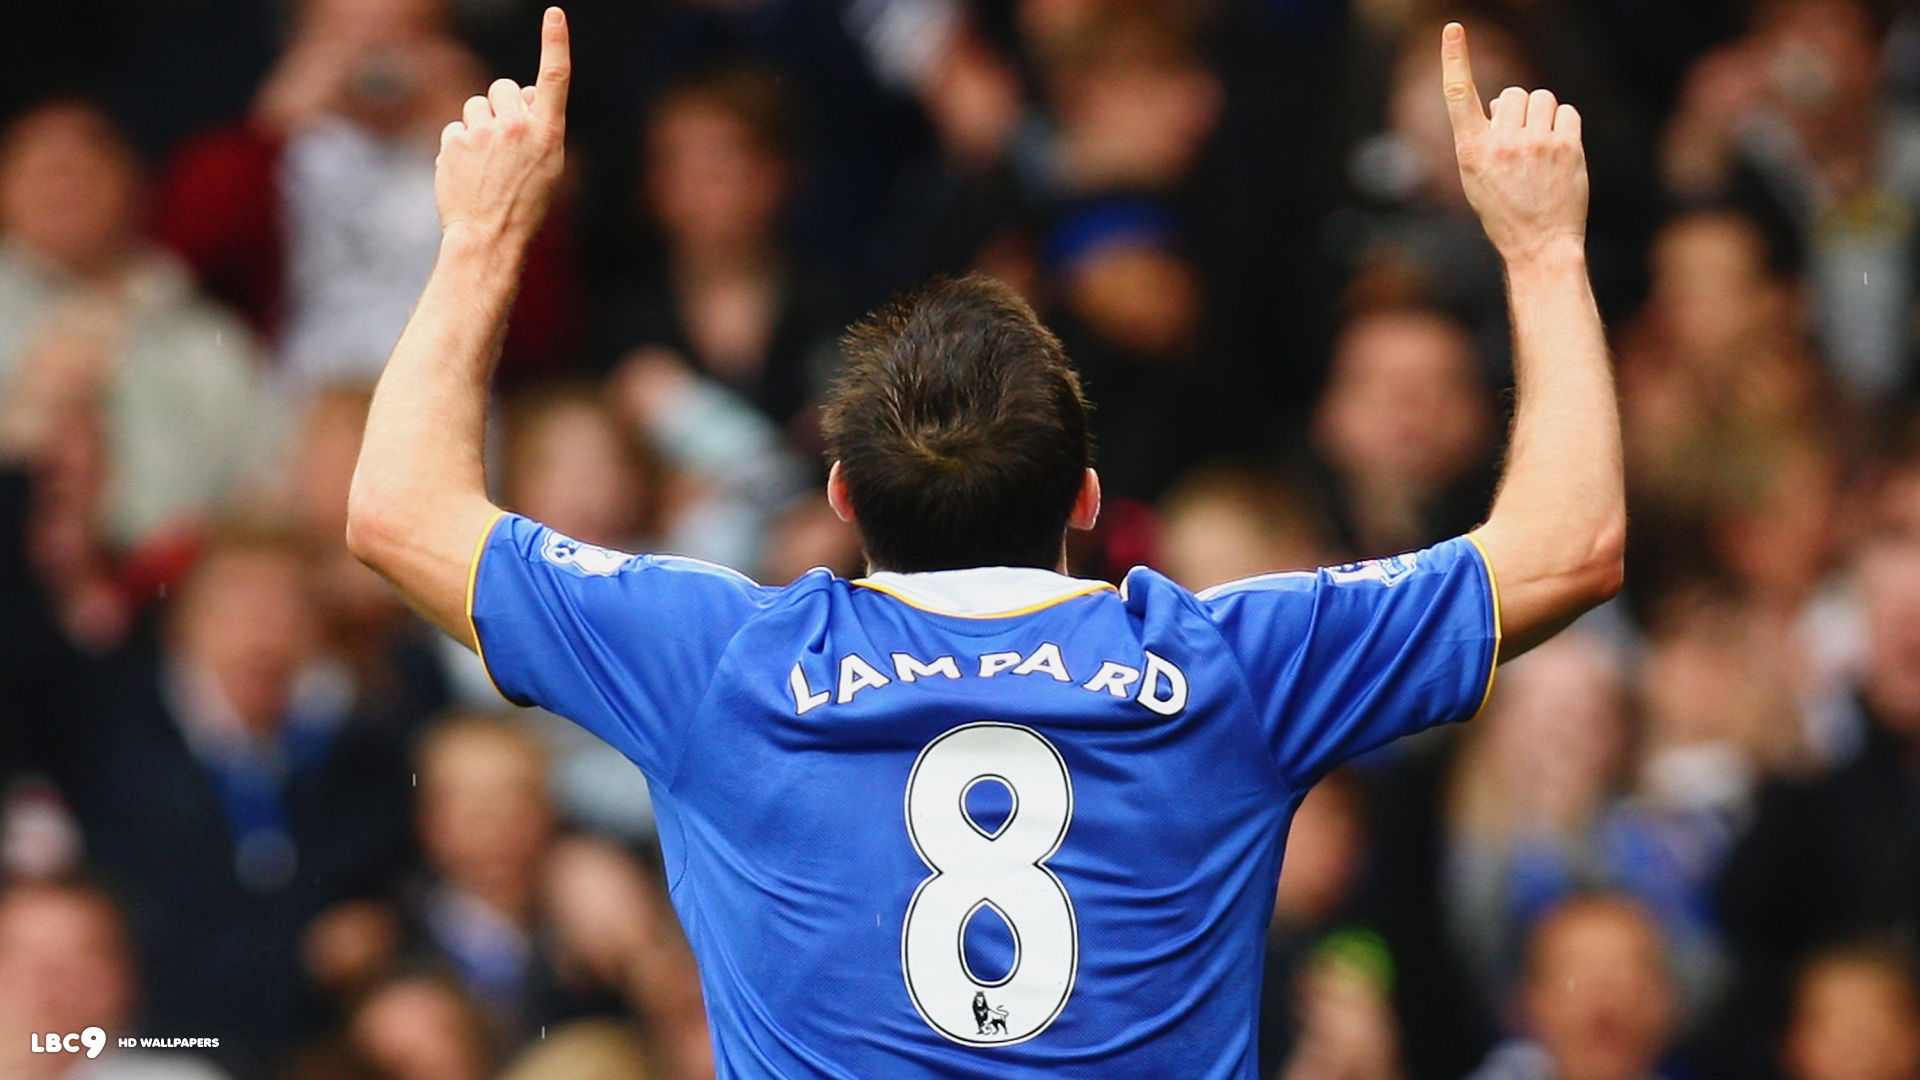 Frank Lampard Chelsea FC Arms Up Sport Male Futbol Chileno Soccer 1920x1080